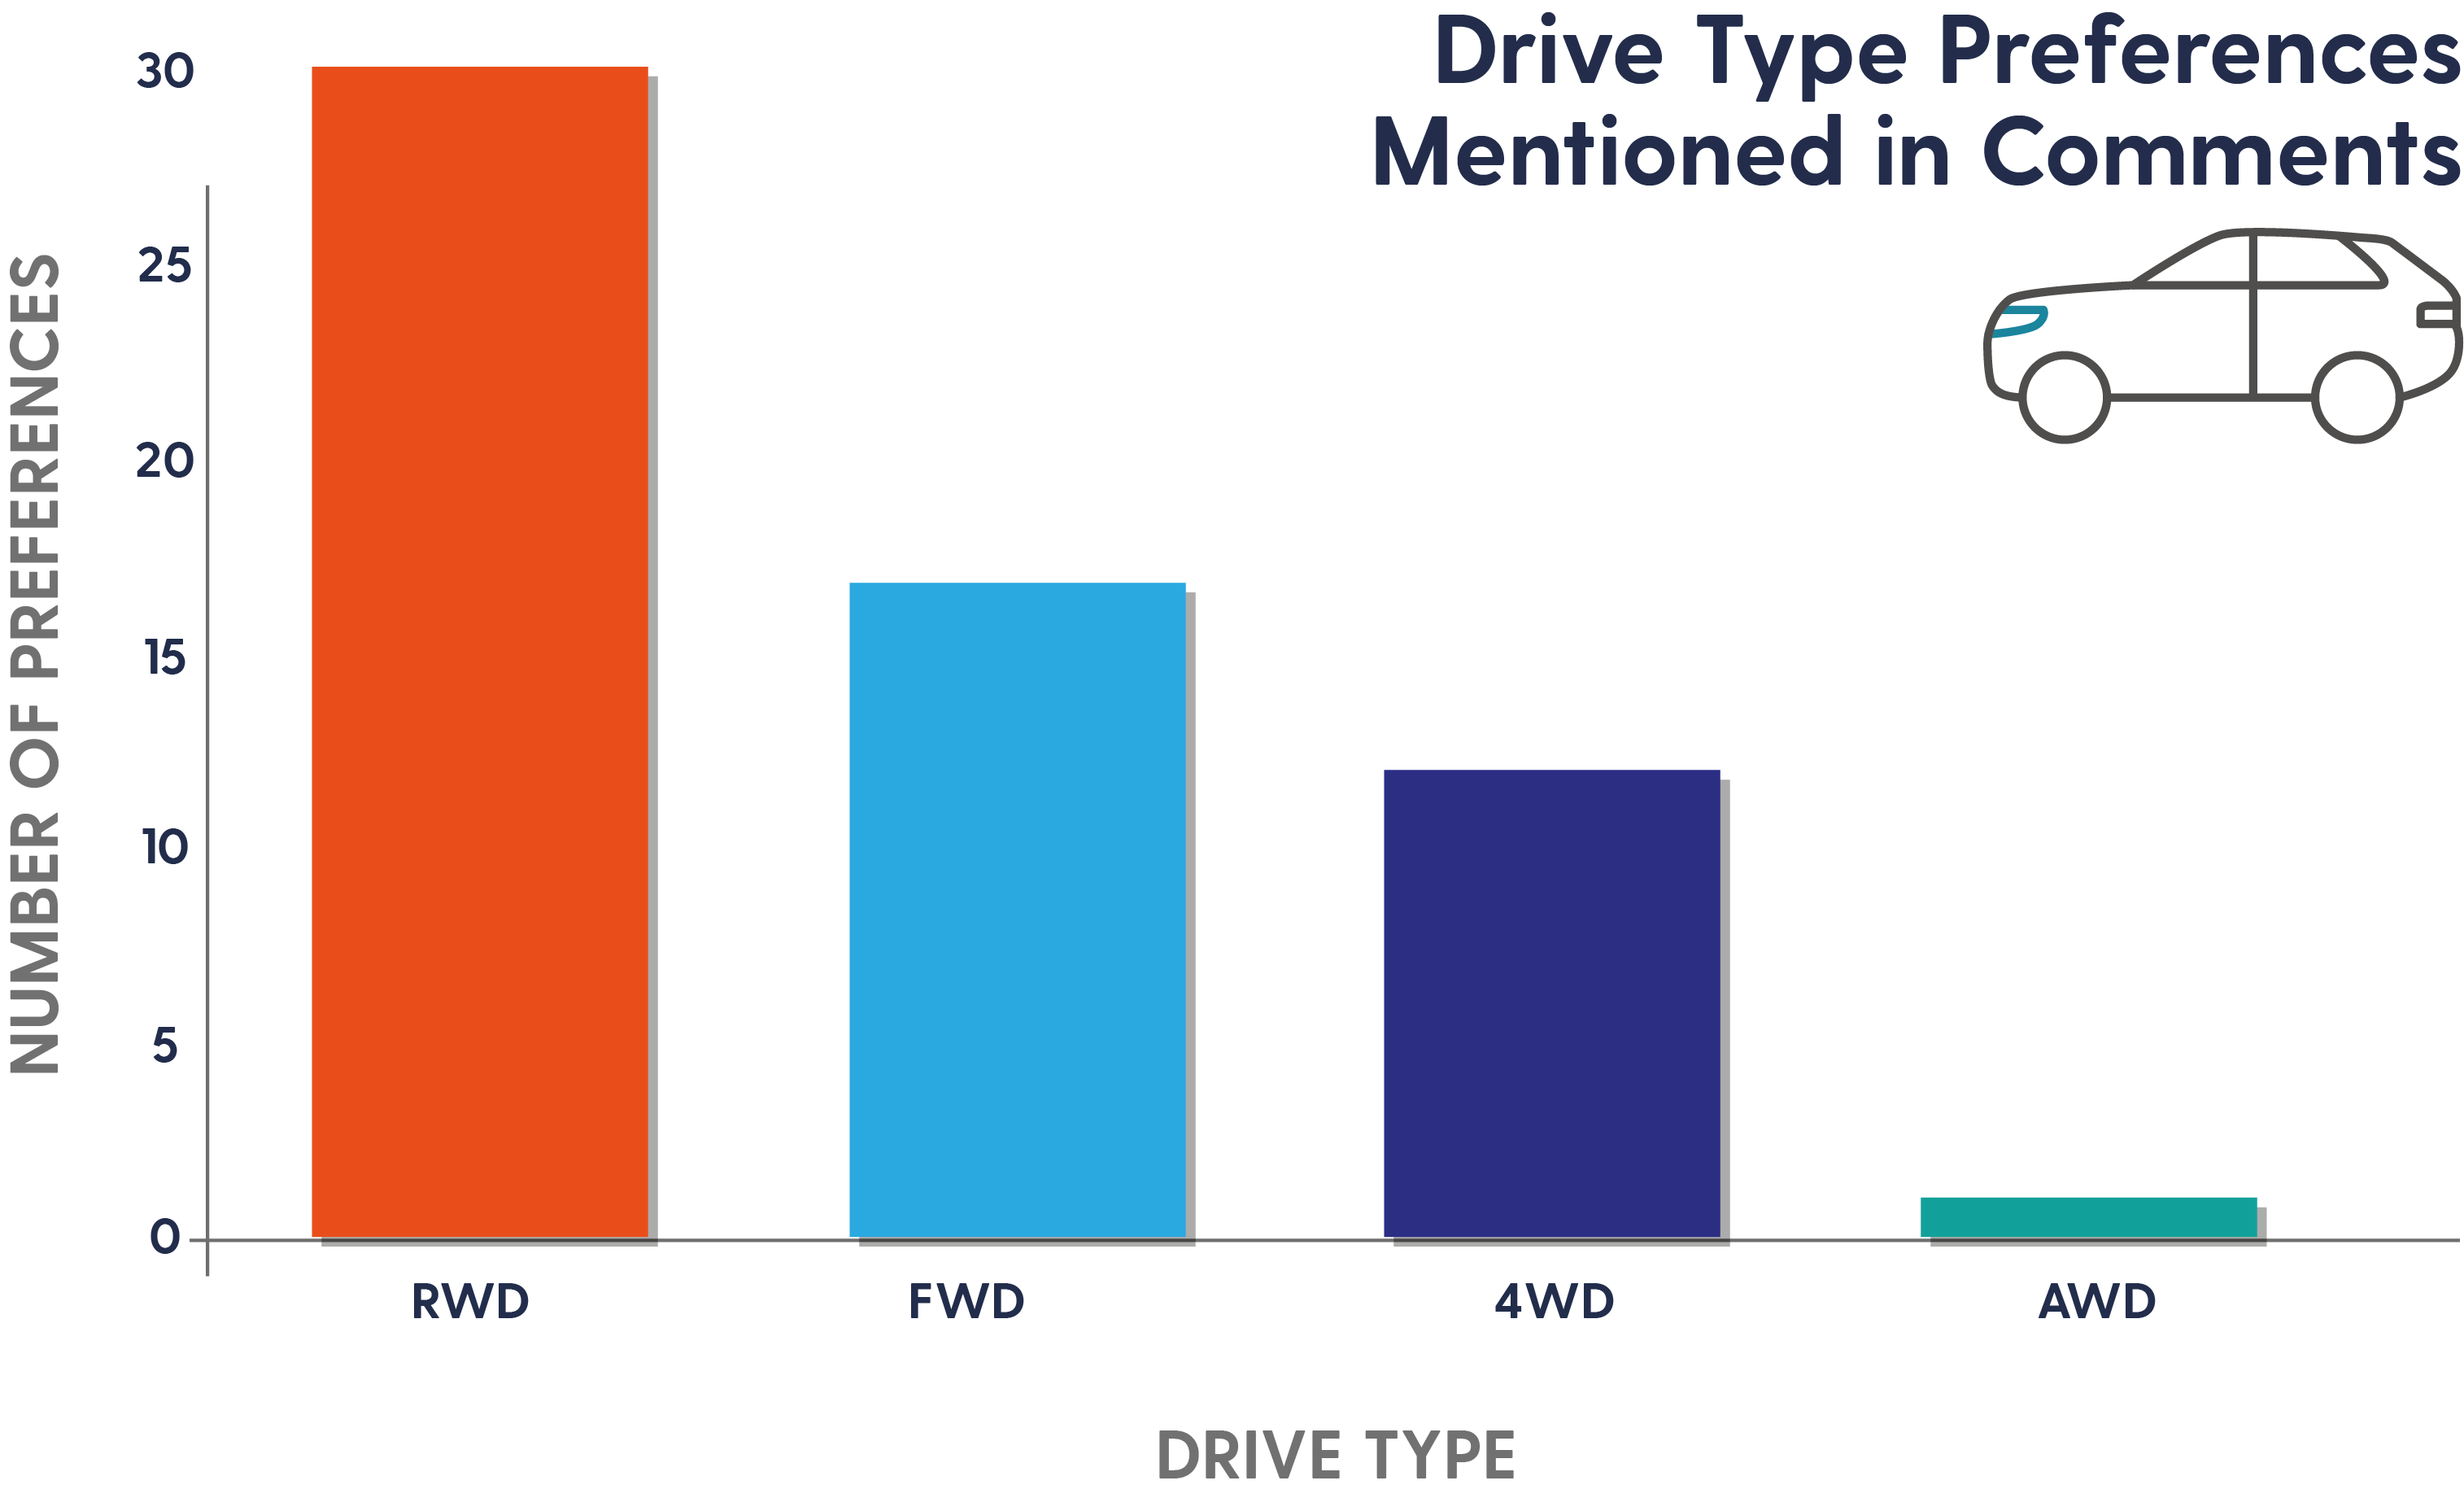 car enthusiast survey result in a bar graph regarding the prefer drive train